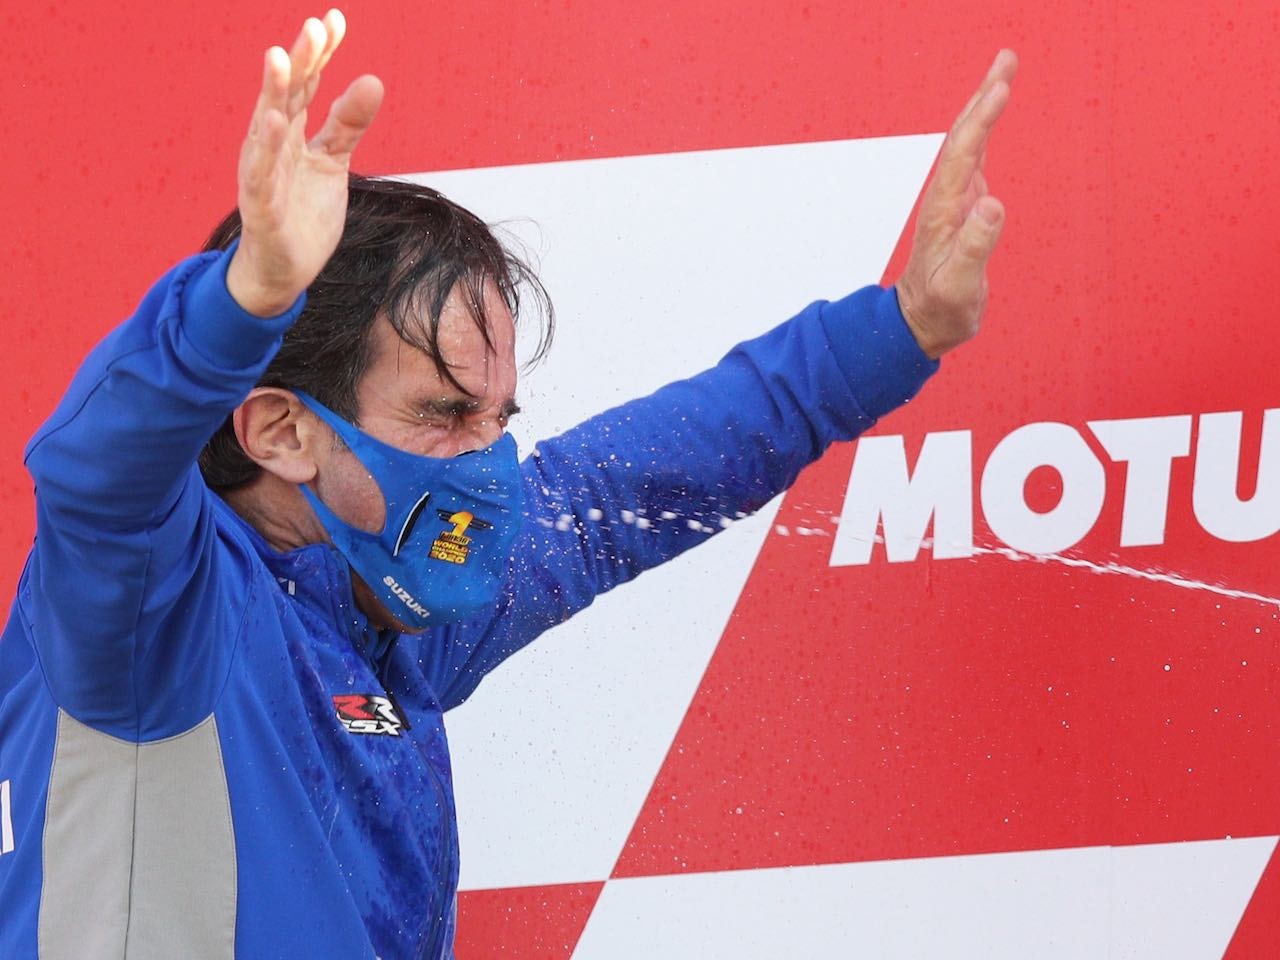 Brivio admits F1 role at Alpine has changed